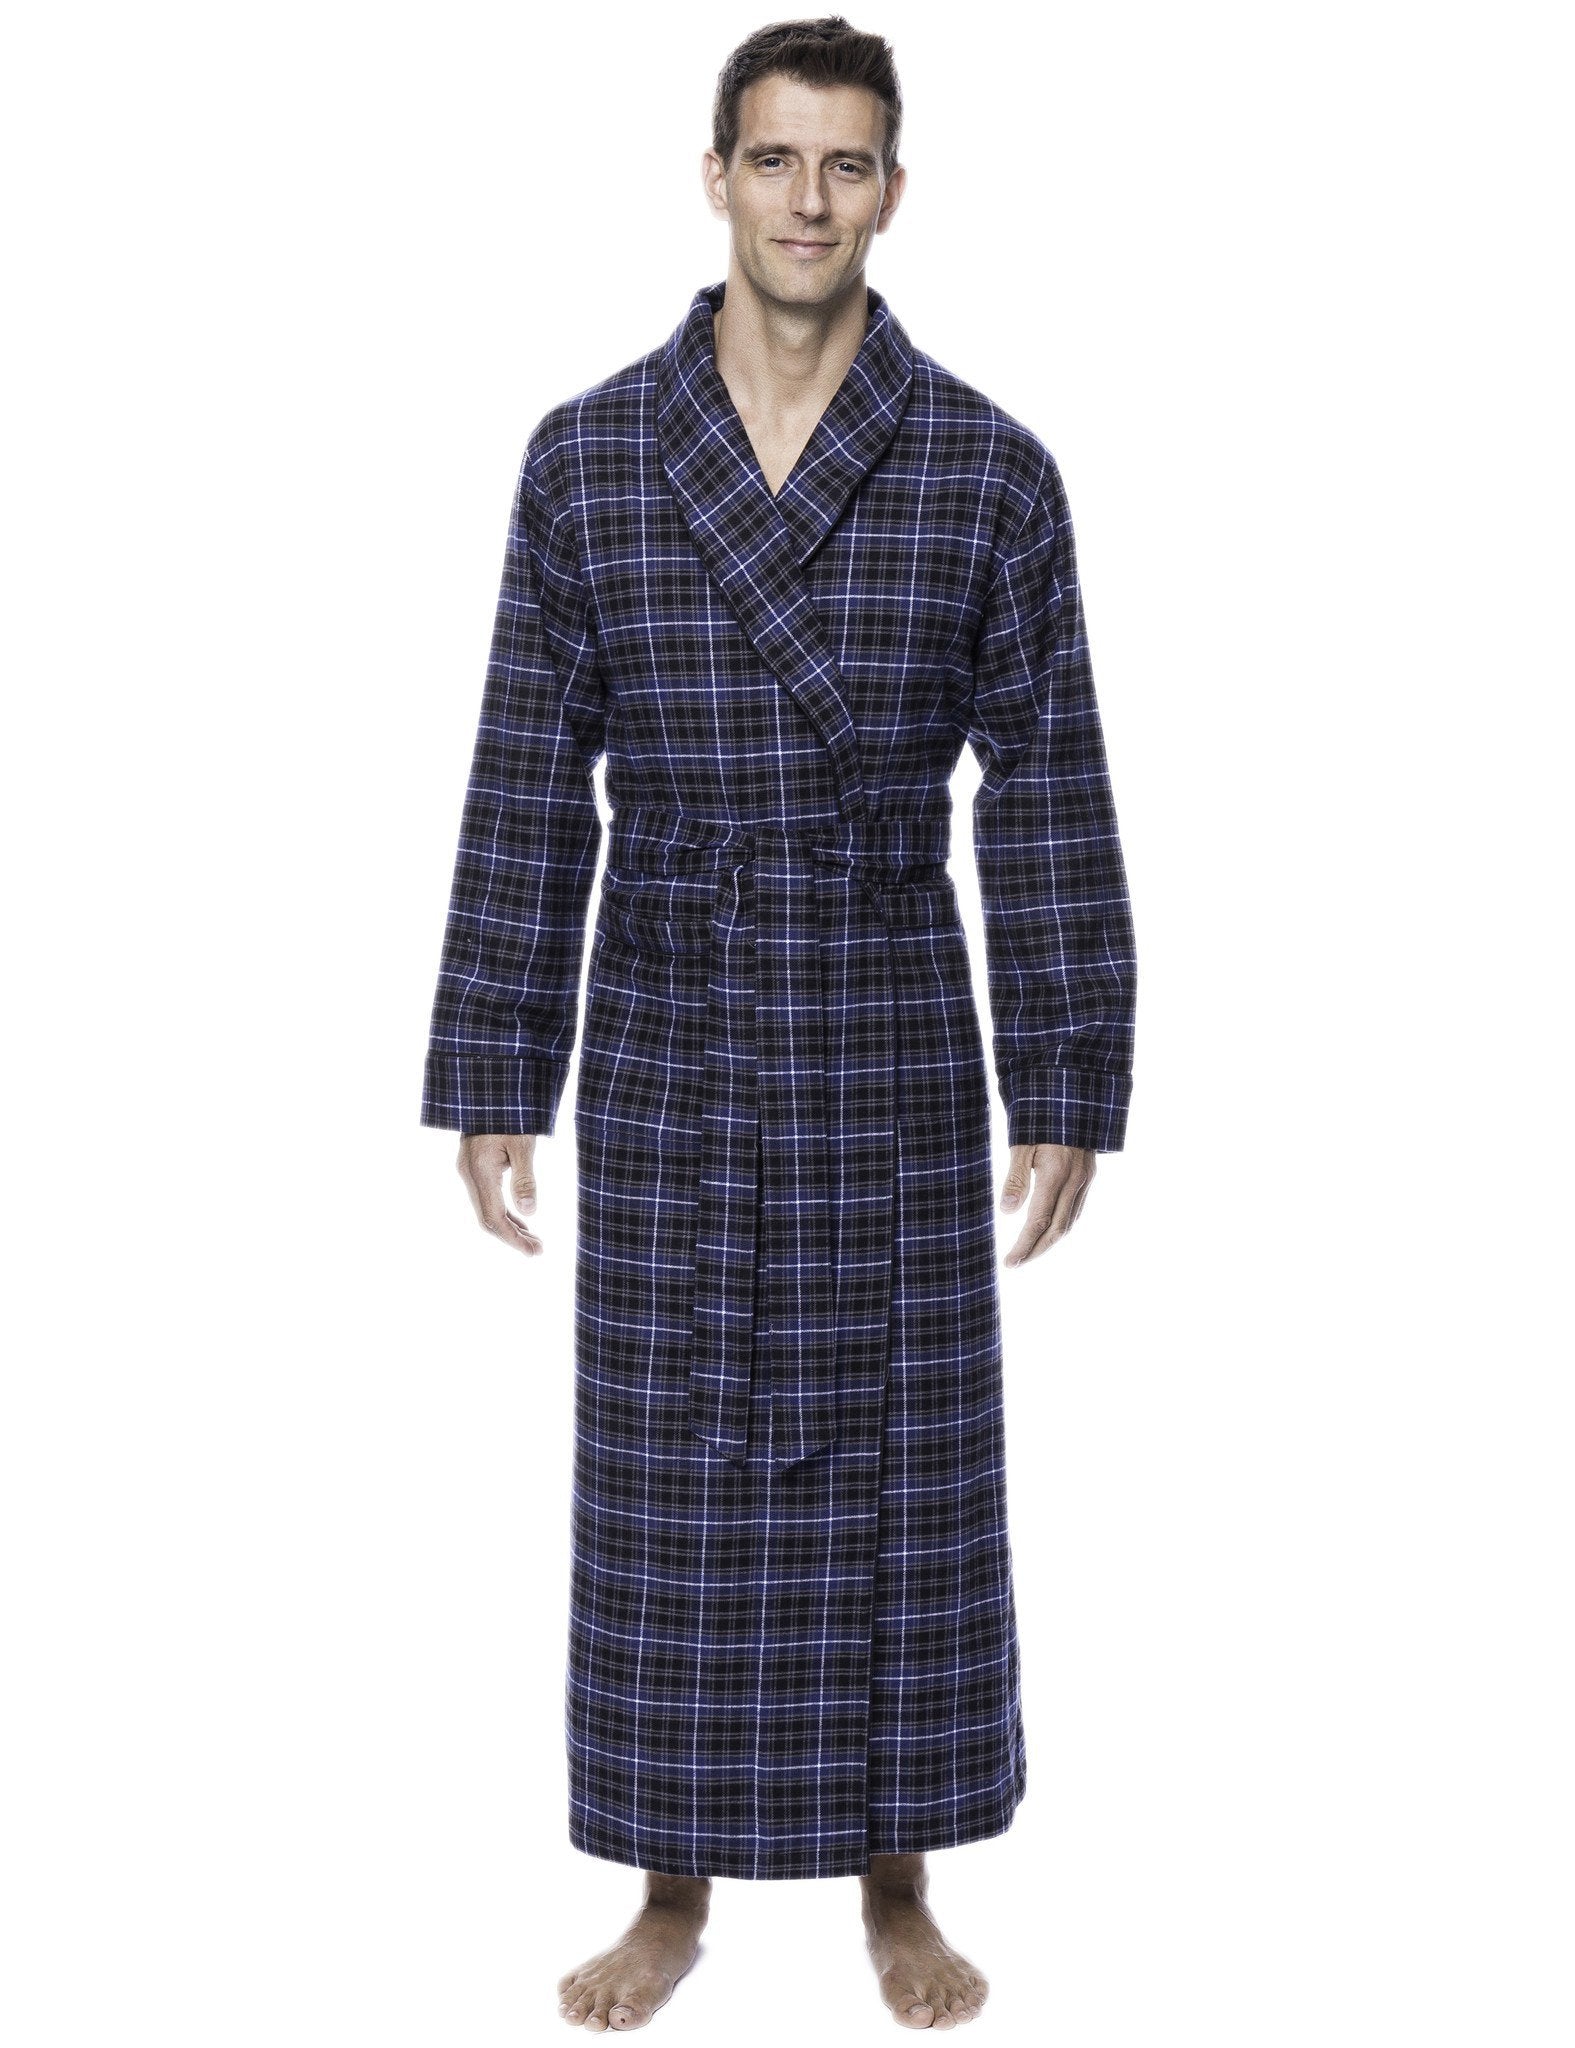 Box Packaged Men's Premium 100% Cotton Flannel Long Robe - Plaid Navy/Black